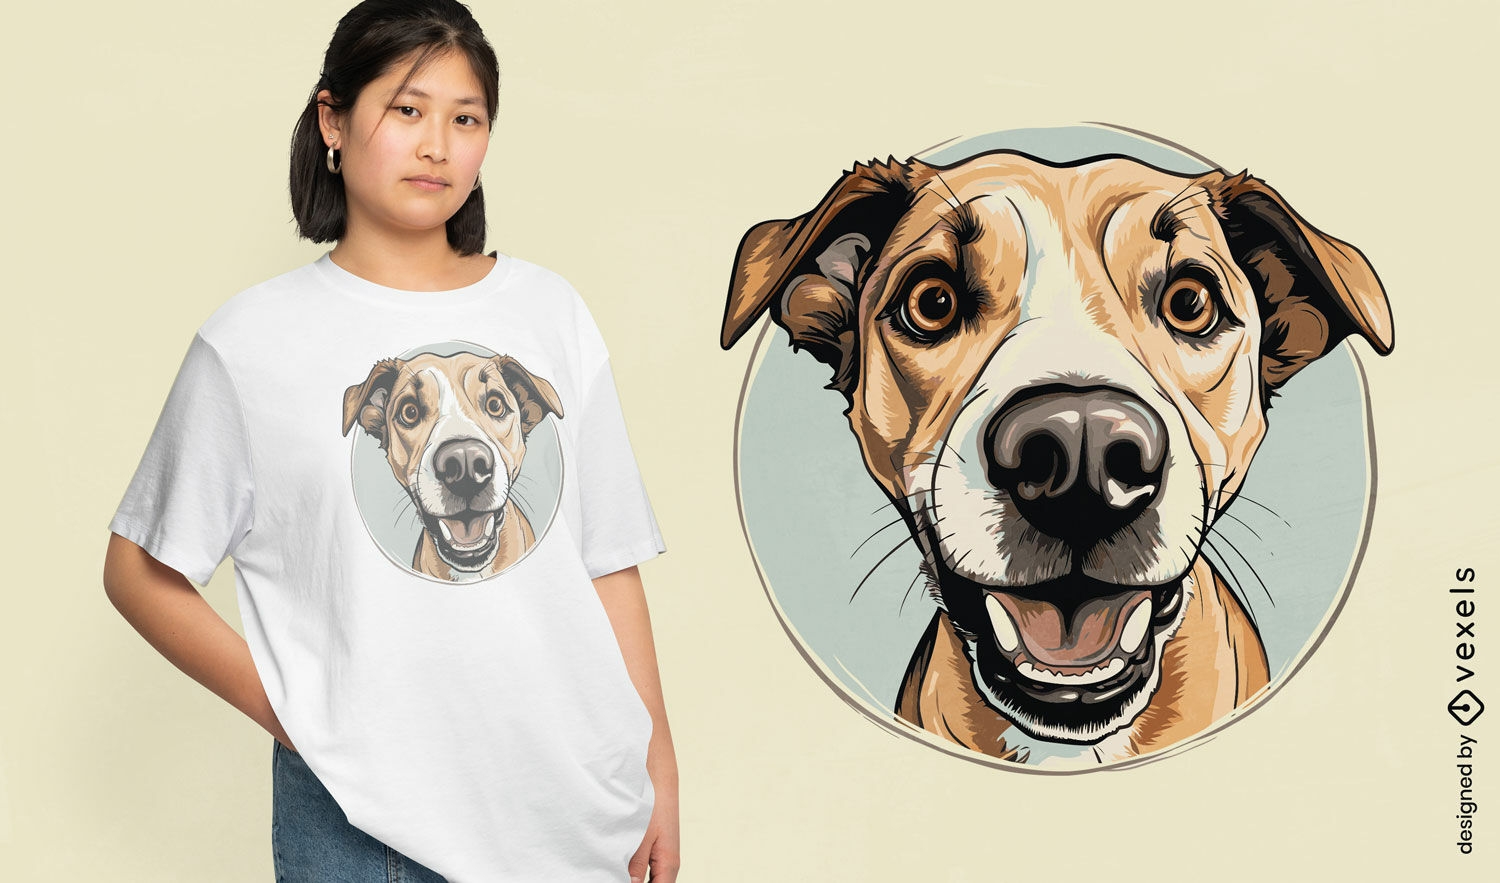 Fr?hliches T-Shirt-Design mit Hundeportr?t